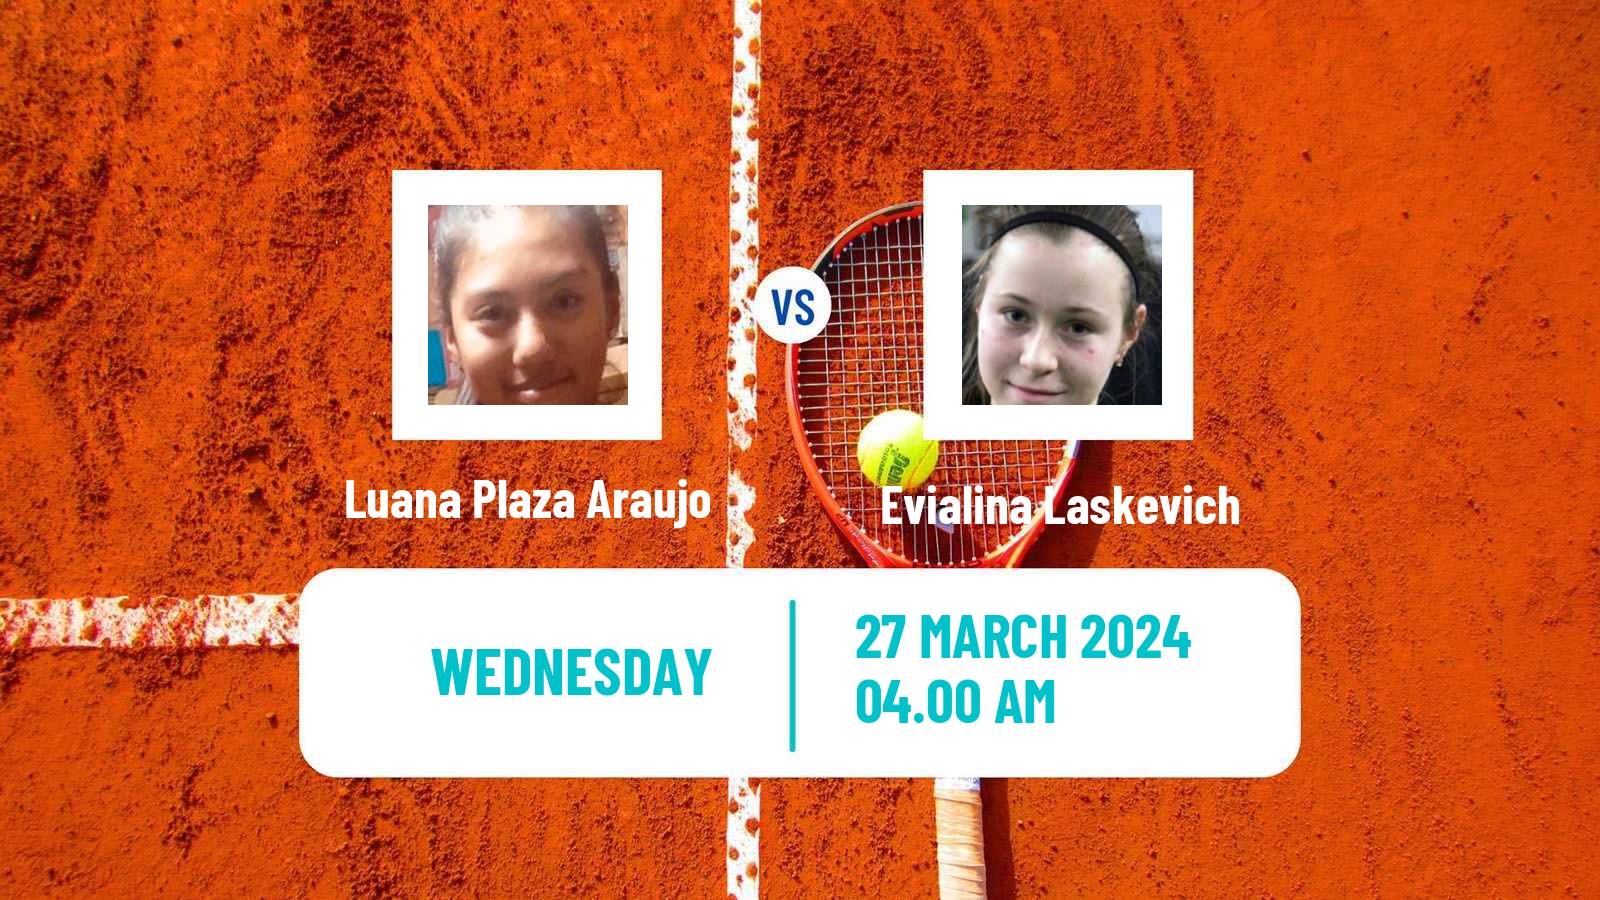 Tennis ITF W15 Monastir 11 Women Luana Plaza Araujo - Evialina Laskevich